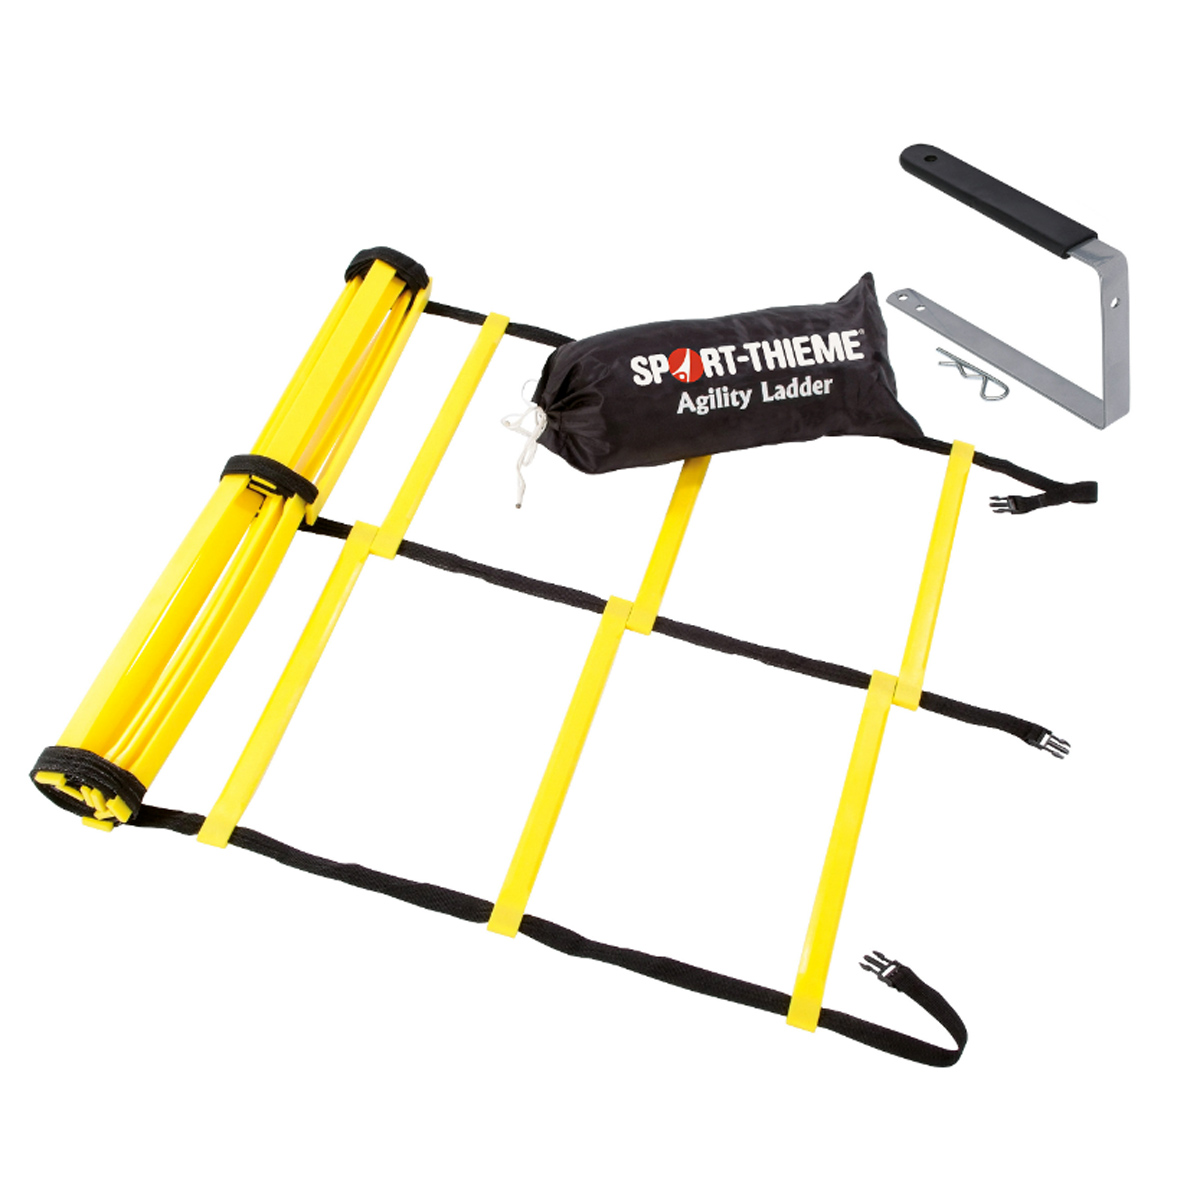 Coordination ladder "Agility" single ladder 8m black/yellow